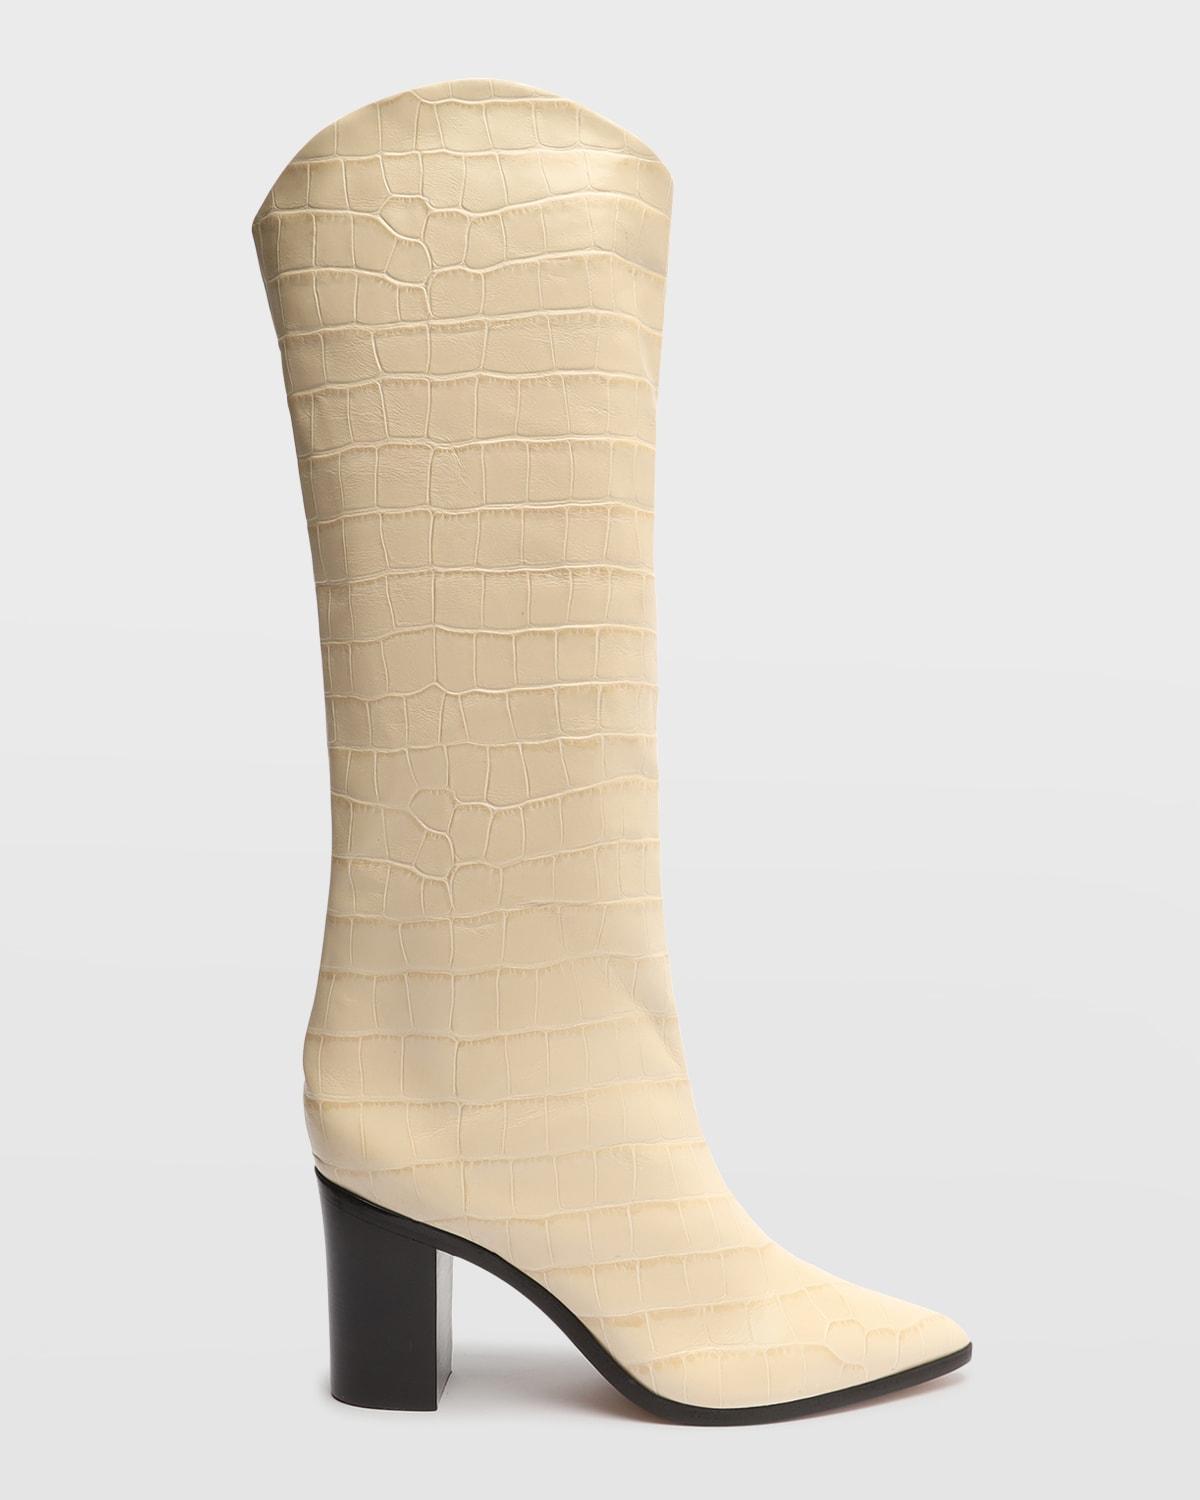 Schutz Maryana Block Pointed Toe Knee High Boot Product Image